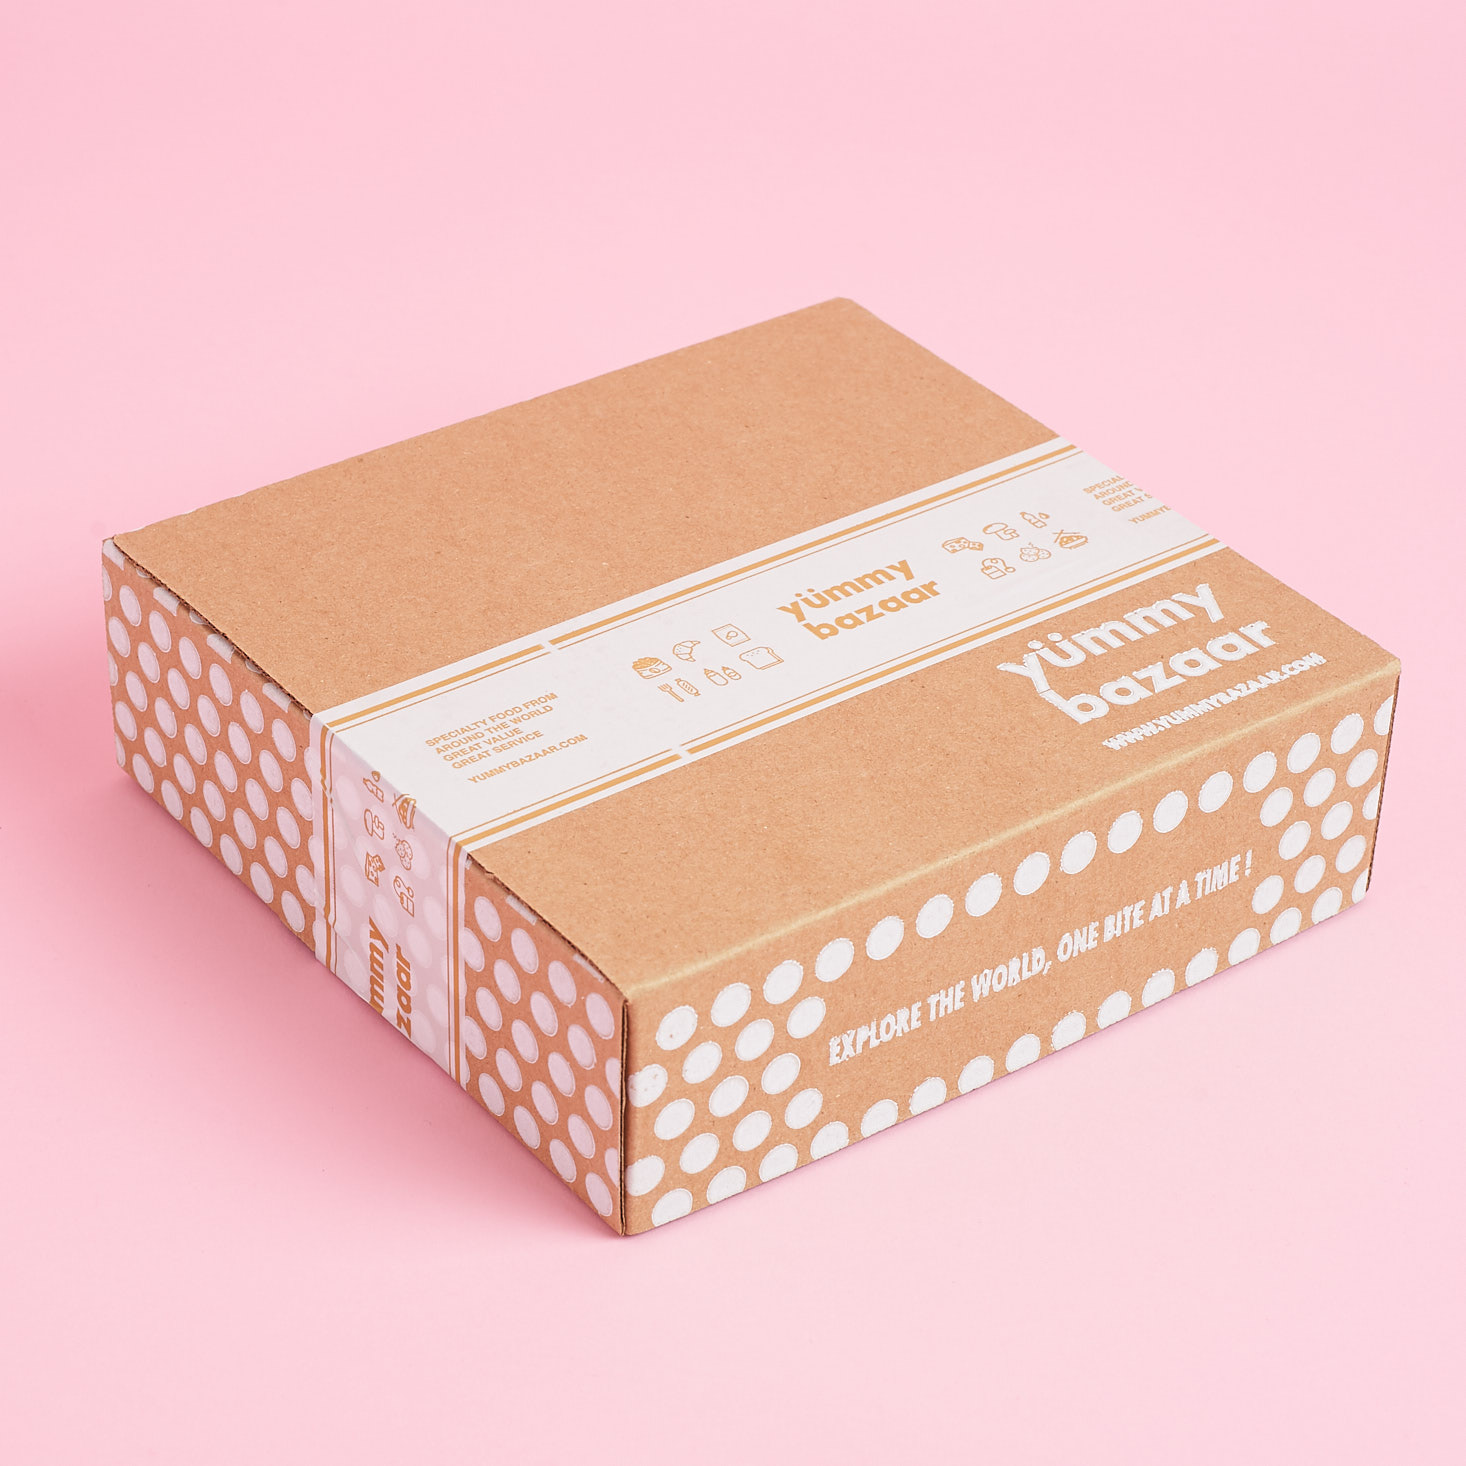 Yummy Bazaar World Sampler Box Review – July 2018